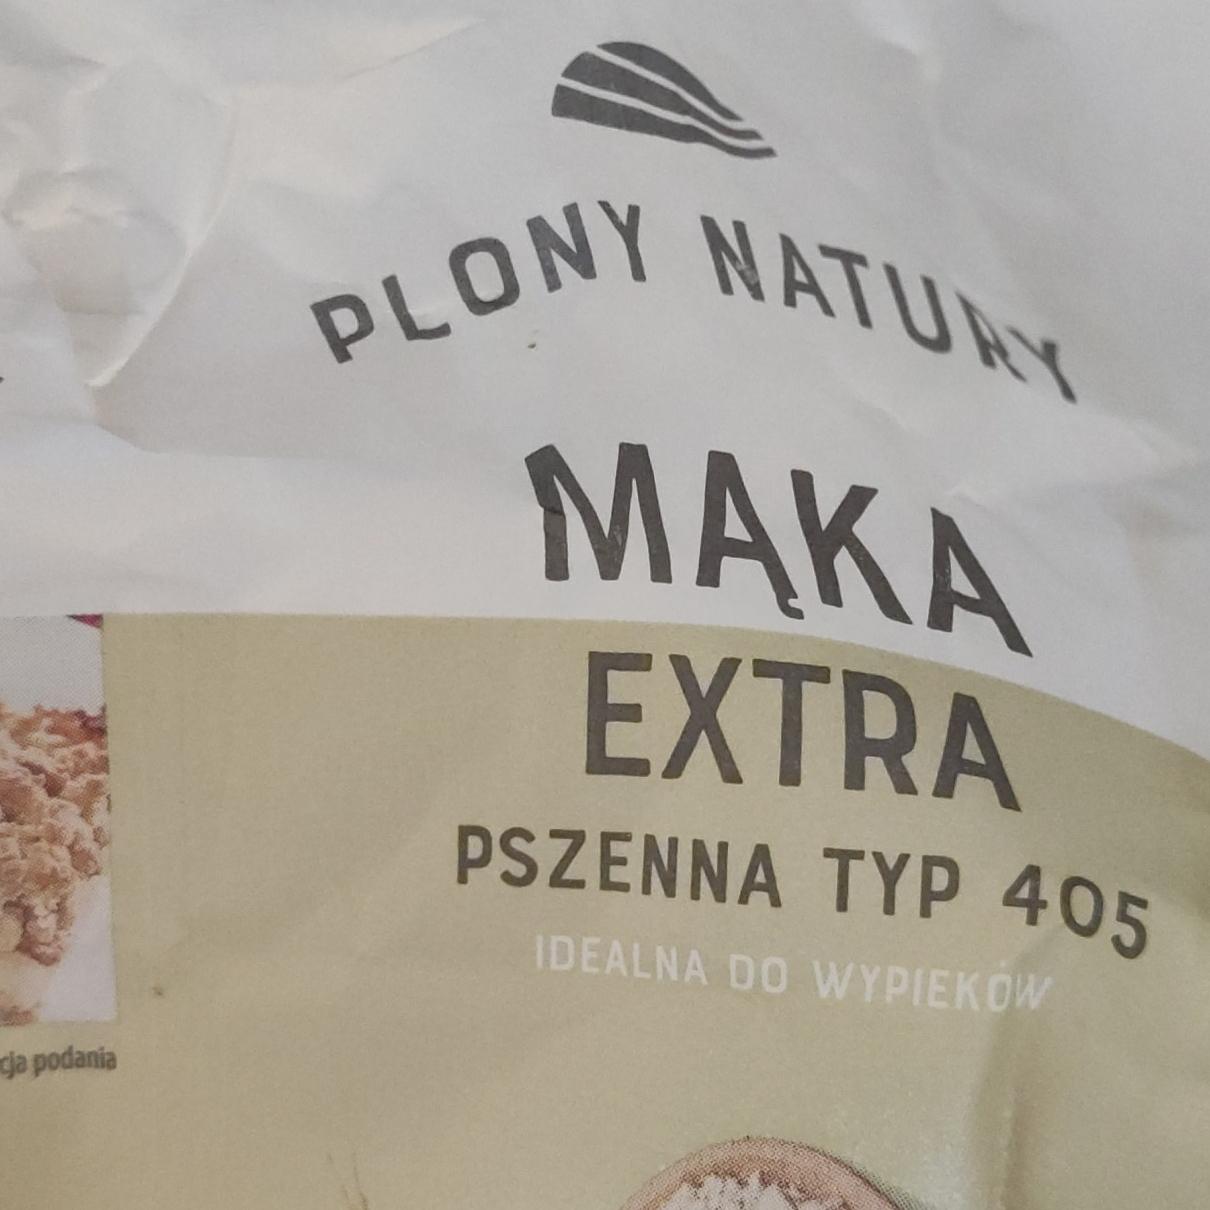 Фото - Мука пшеничная Maka Extra Plony Natury